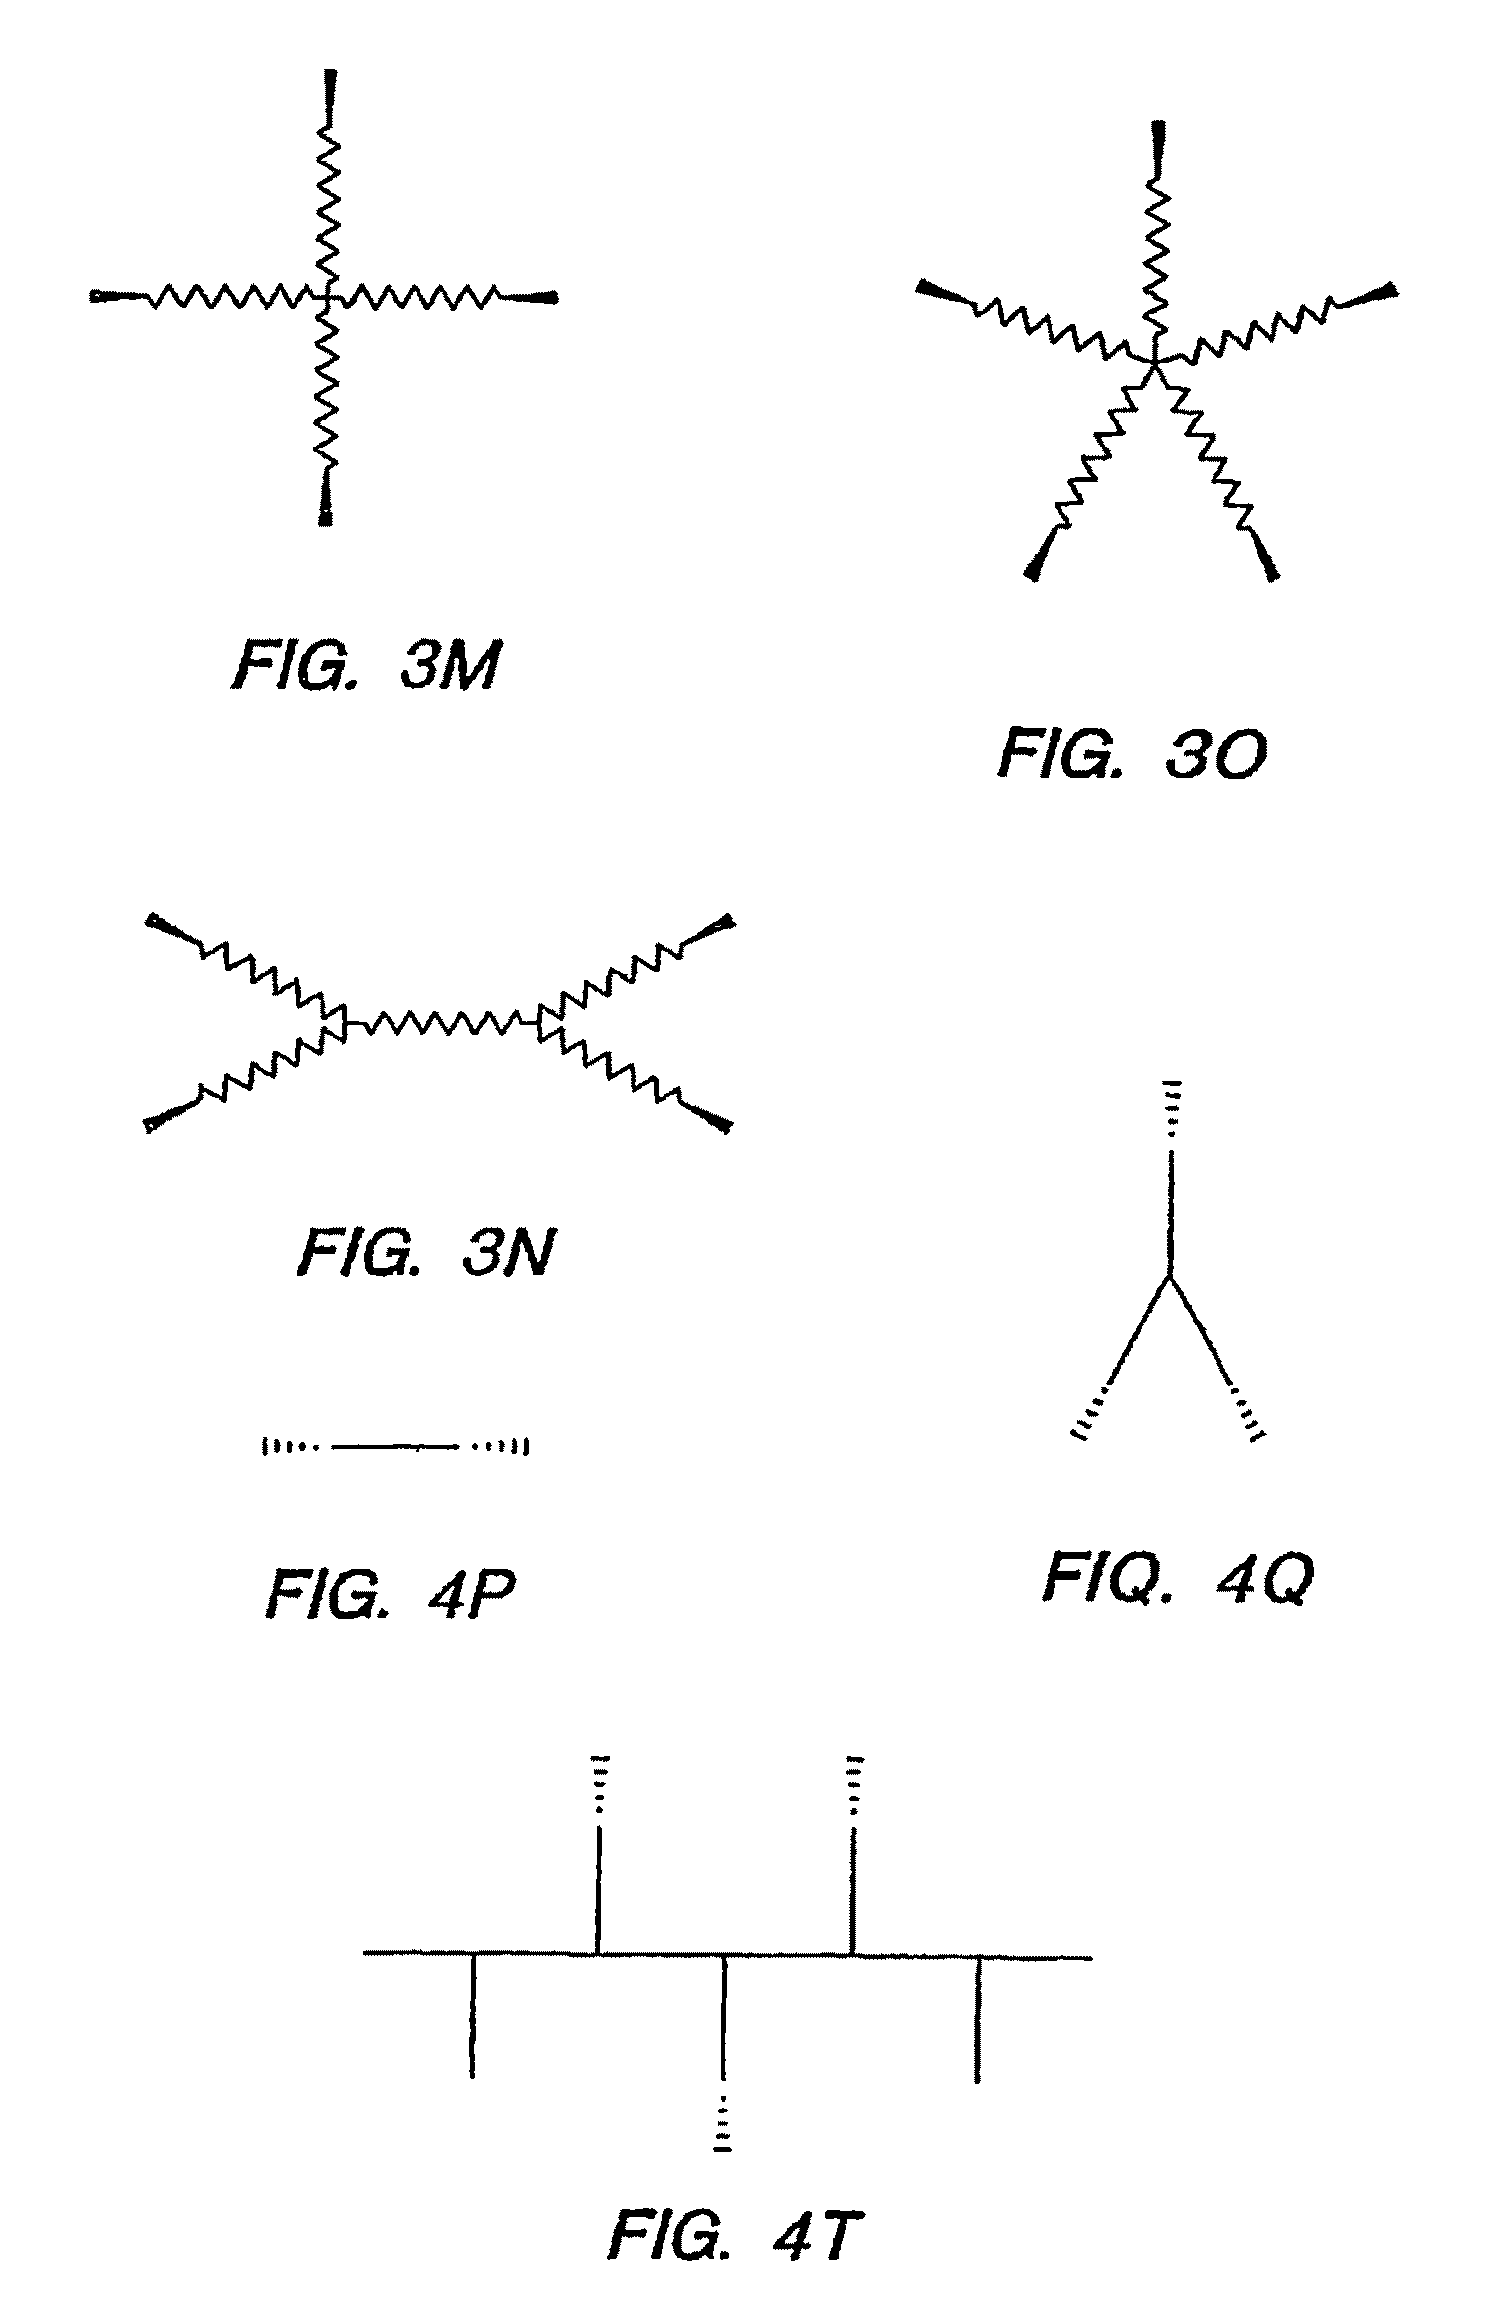 Biocompatible hydrogels made with small molecule precursors